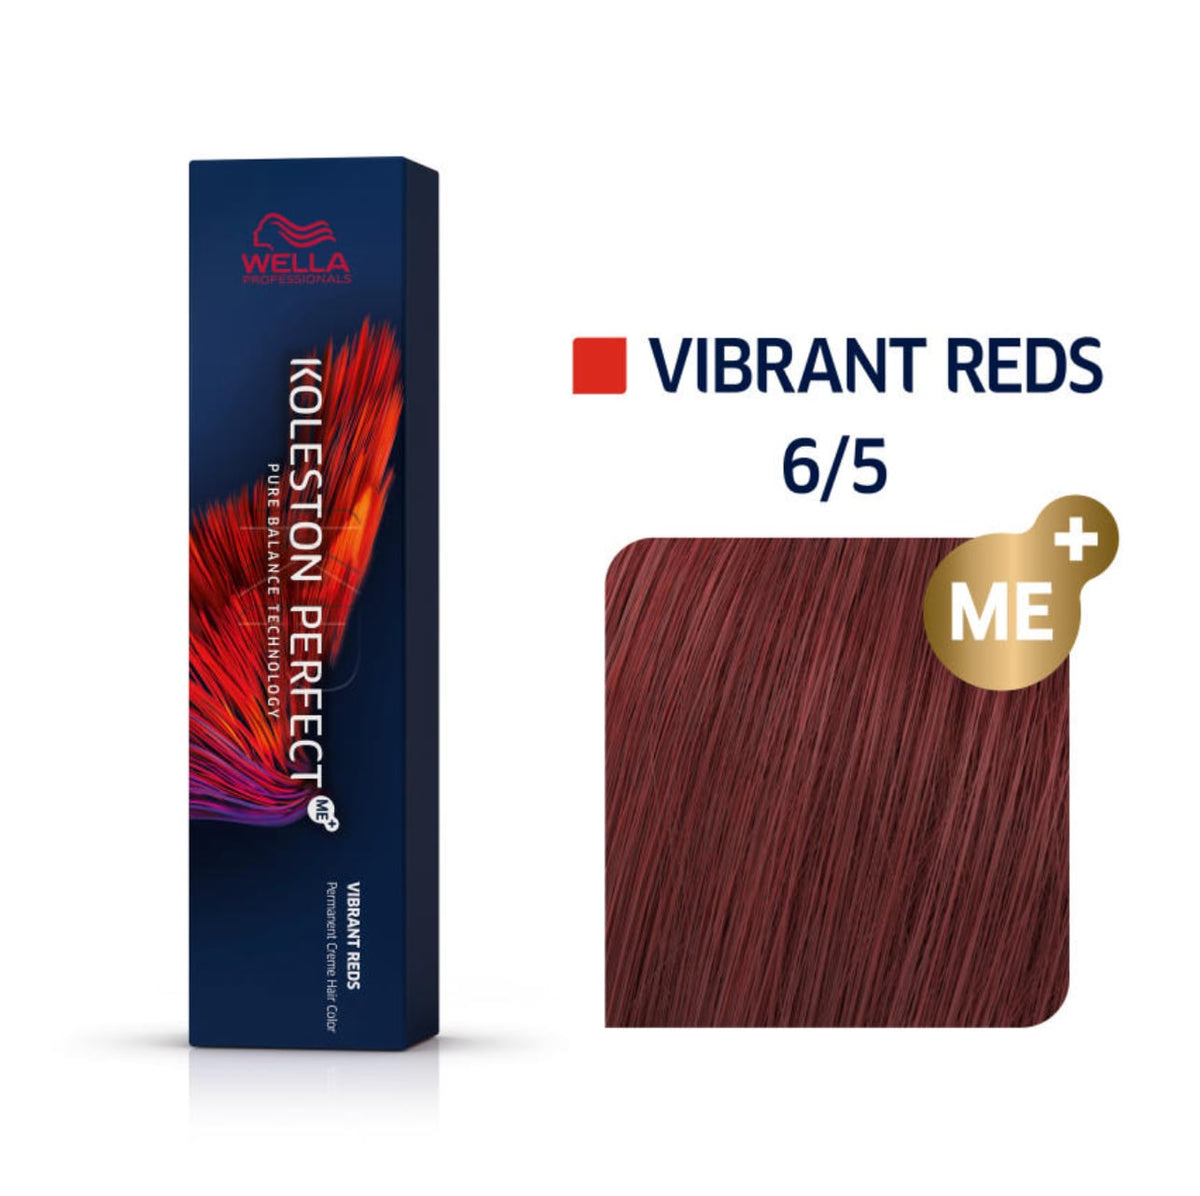 Wella Koleston Vibrant Reds 6/5 Hair Colour (60ml) - beautyhair.co.ukHair Colour